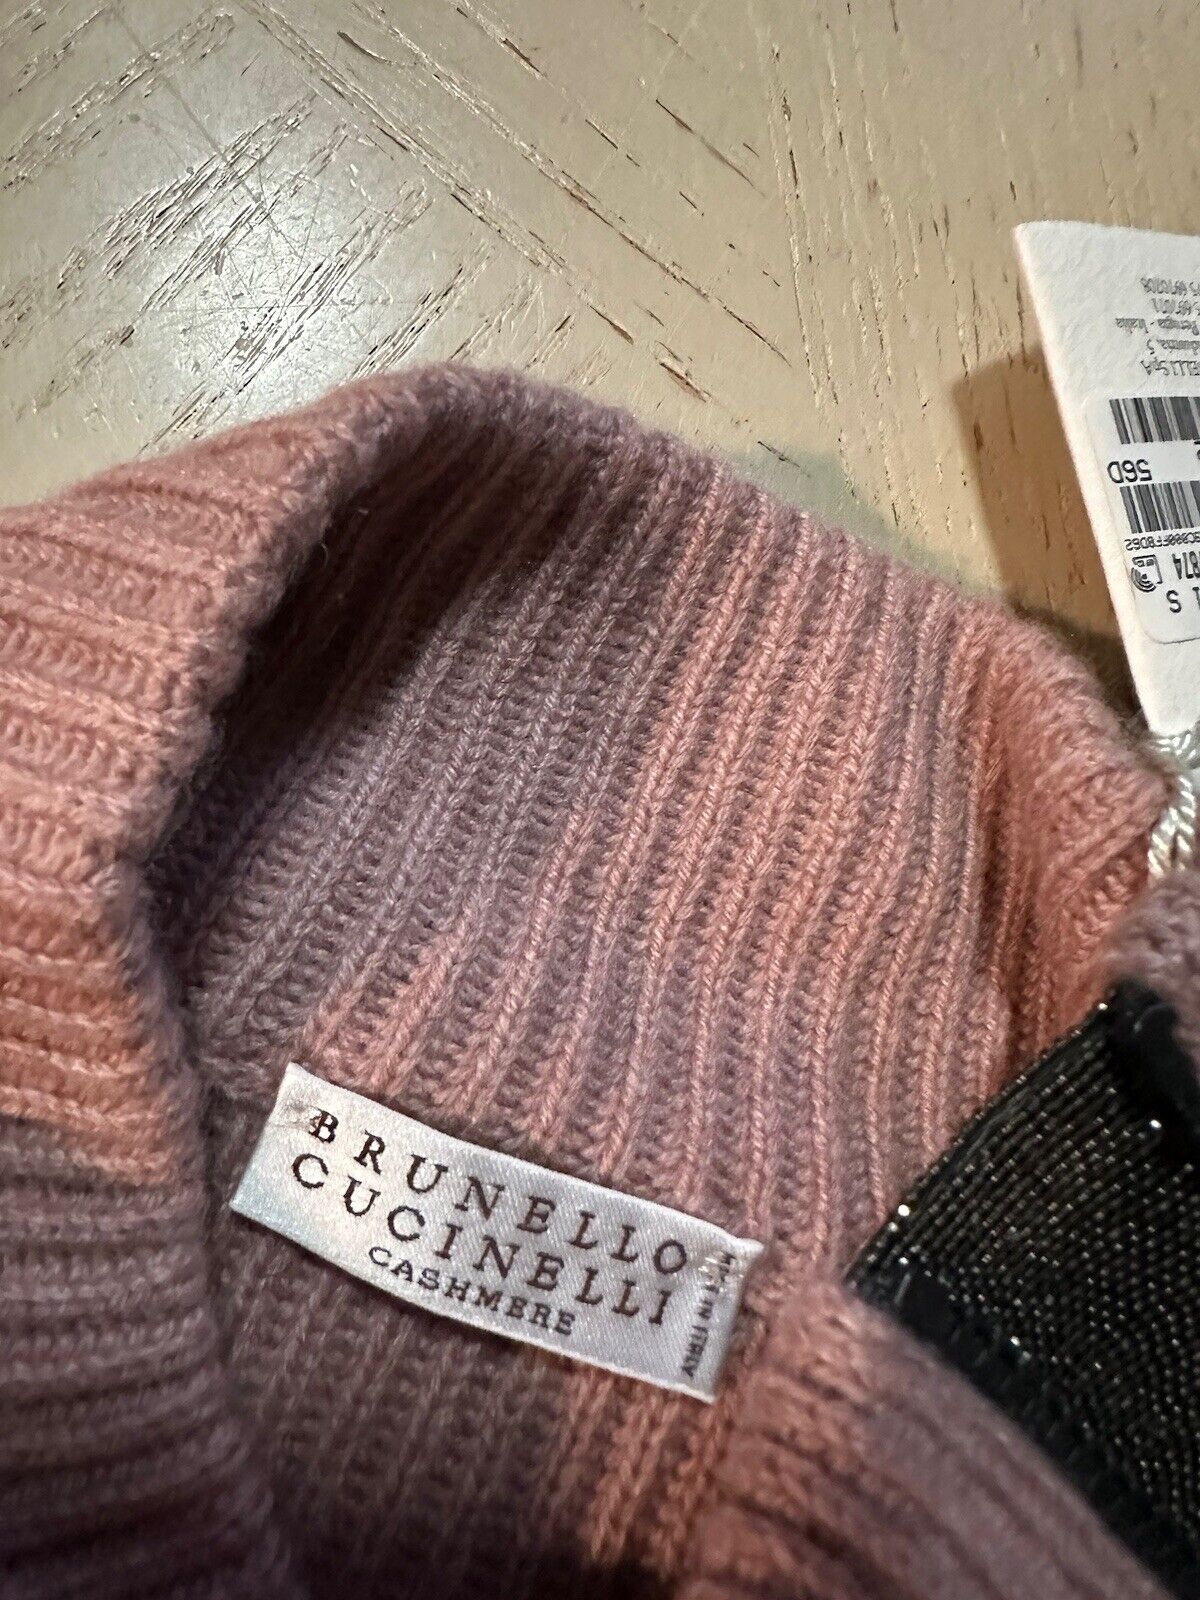 New $4500 Brunello Cucinelli Capsule Cashmere Sweater Carnation Pink Suze S